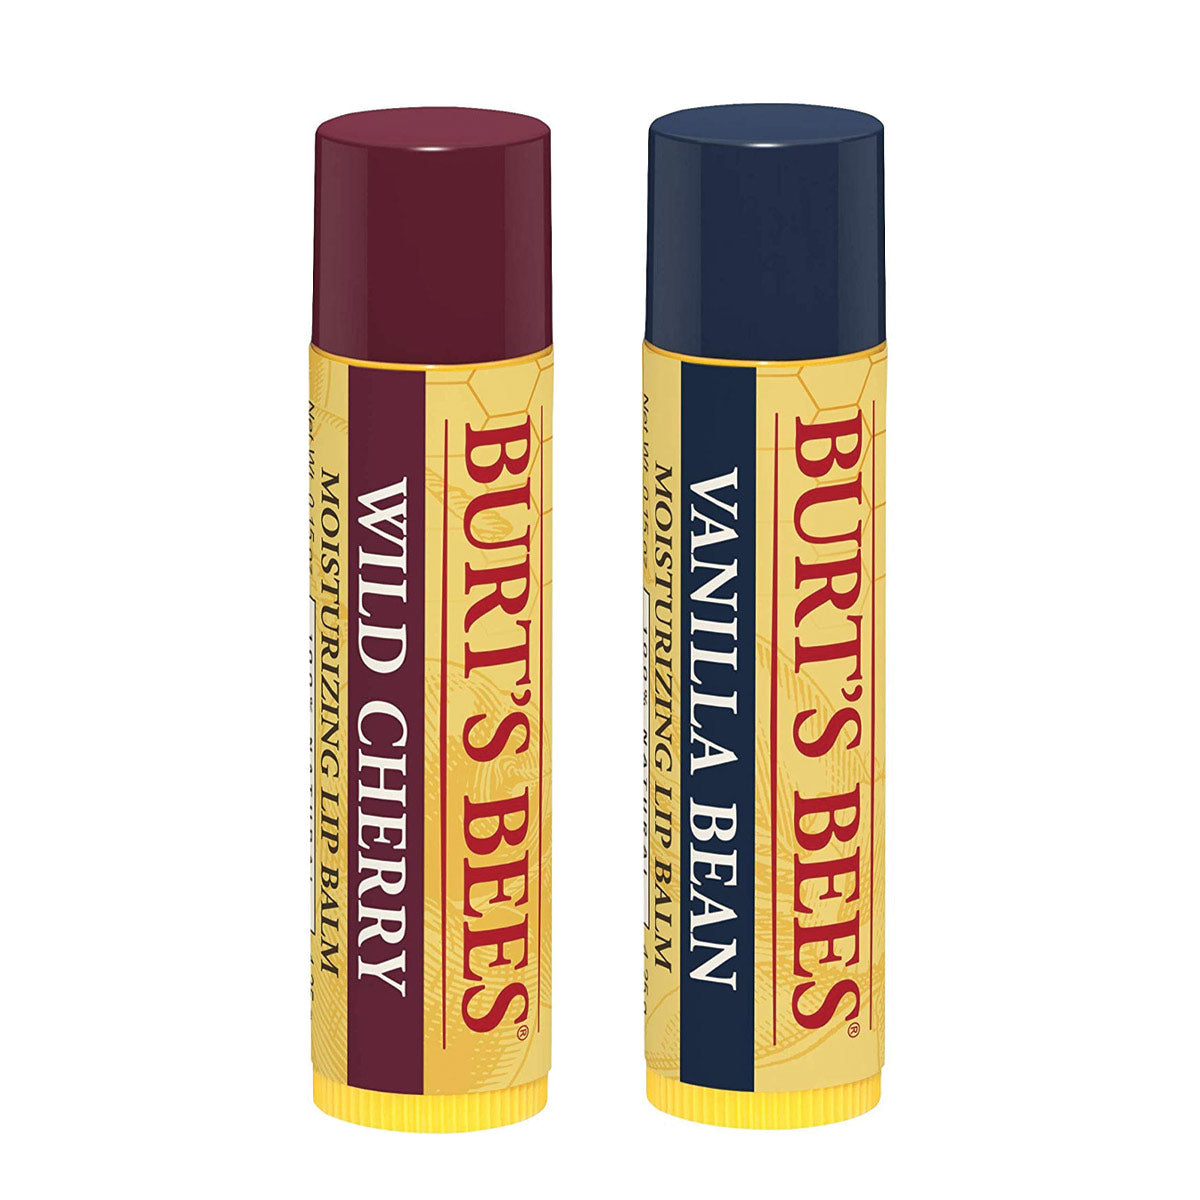 Burt's Bees Lip Balm, Beeswax, 4 Count, 0.15 Oz, Multicolor